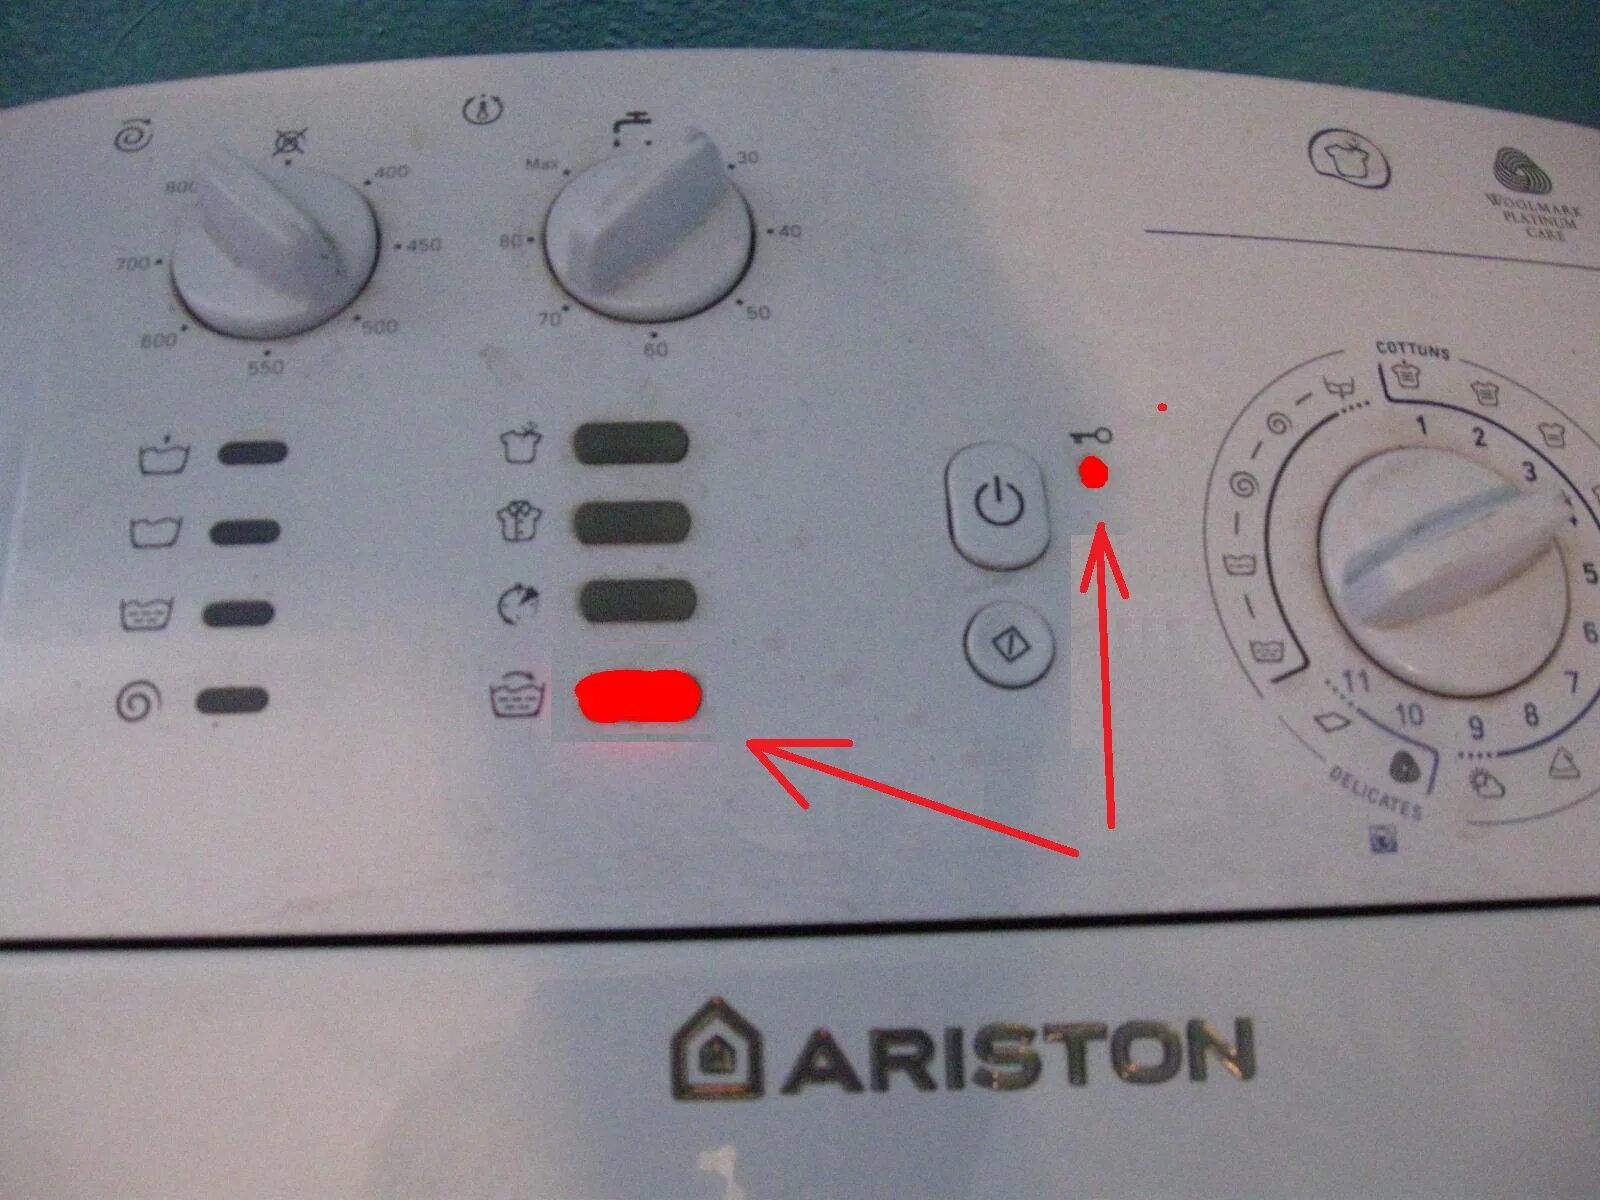 Стиральная машина Ariston AVTL 104. Стиральная машинка Аристон AVTL 83. Hotpoint Ariston стиральная AVTL 104. Коды ошибок стиральной машины Аристон AVTL 104. Hotpoint ariston стиральная вертикальная загрузка